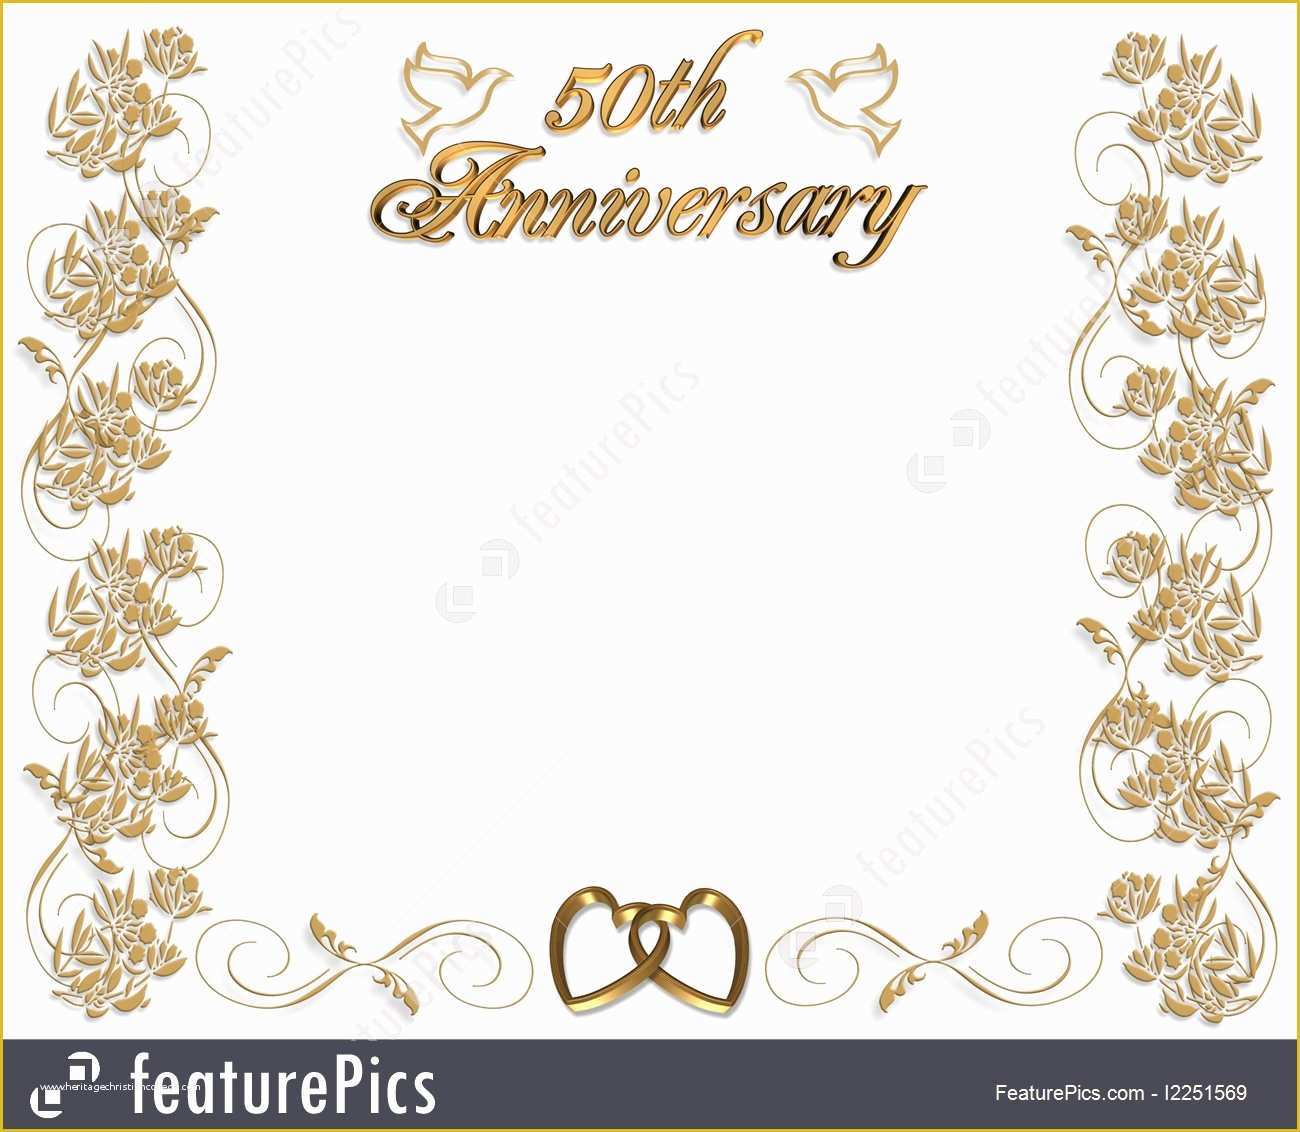 50th Anniversary Templates Free Of Templates Wedding Anniversary Invitation 50 Years Stock